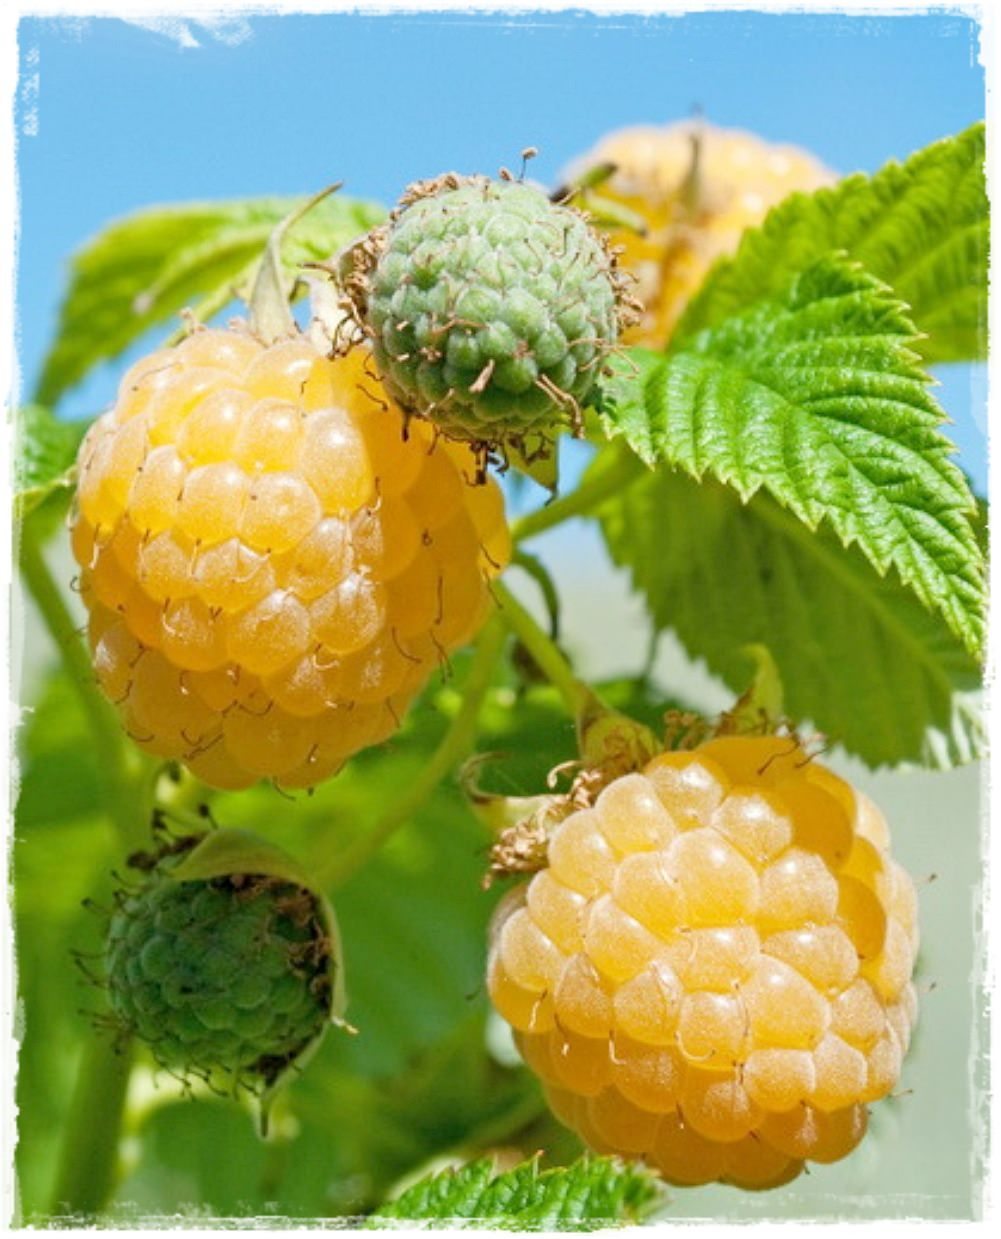 Rubus idaeus 'Fallgold' gele frambozenstruik, 2 liter pot - Schramas.com | Planten direct van de kweker | Schrama Nurseries BV.